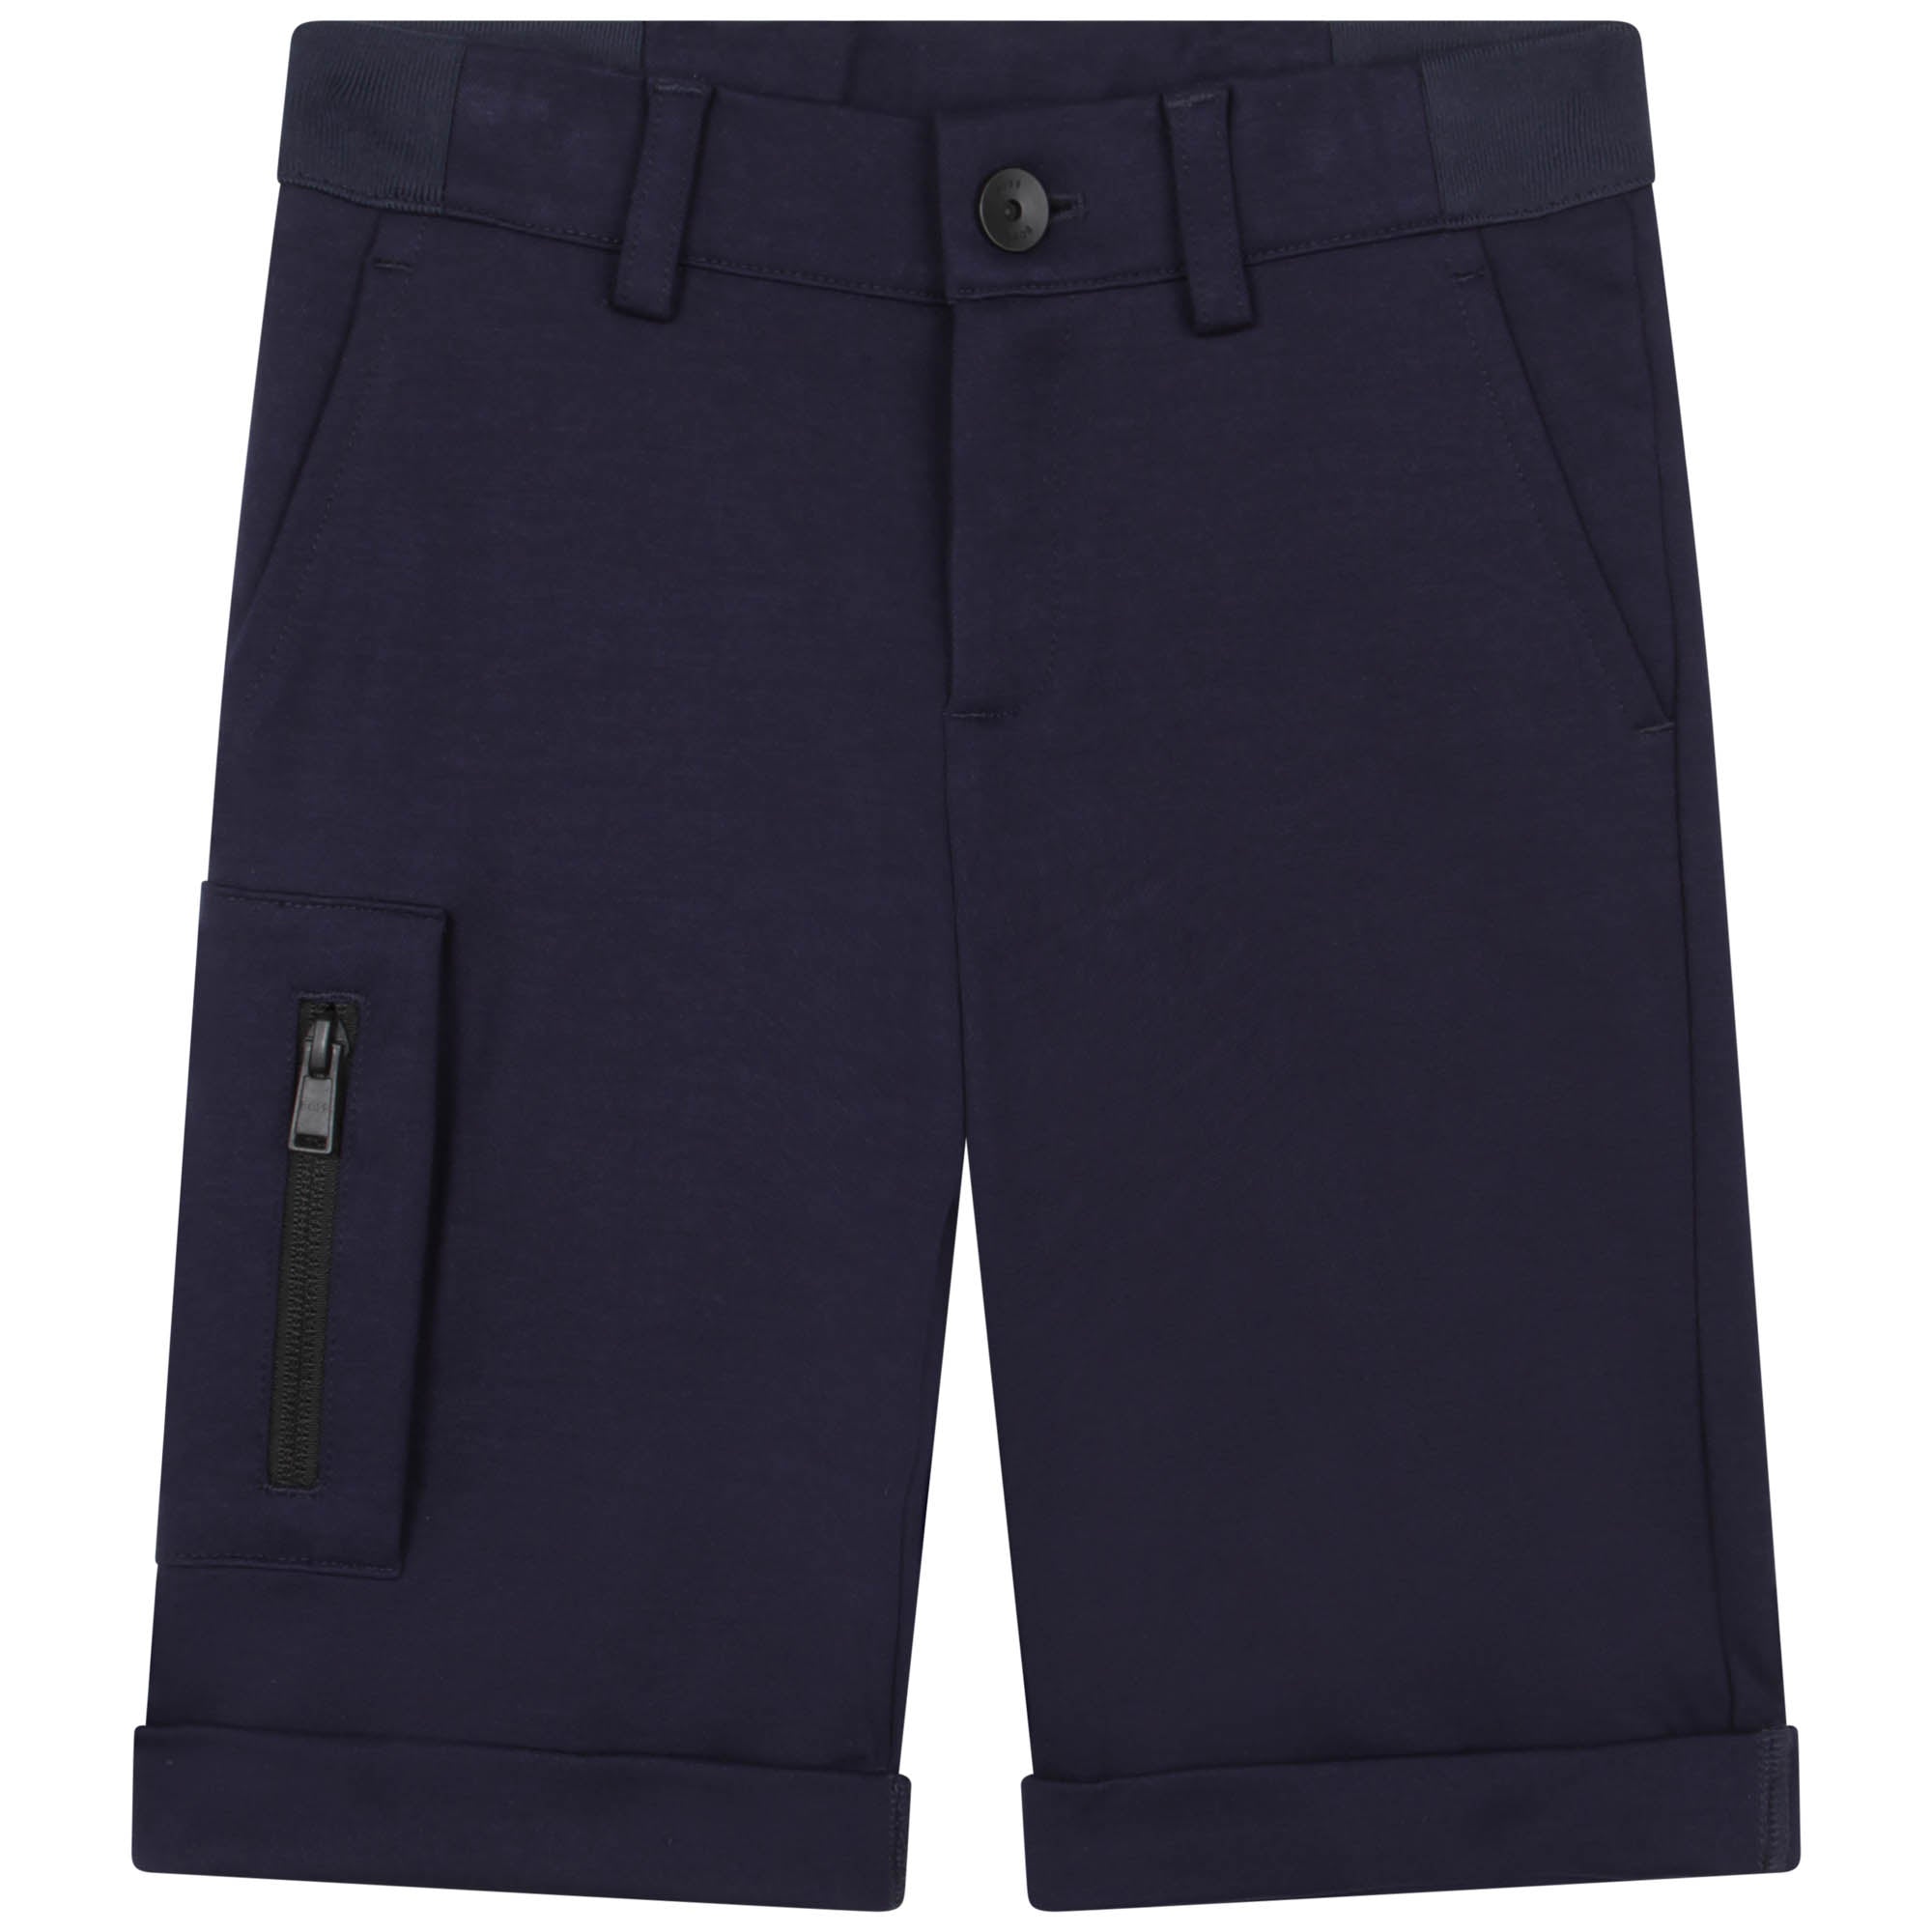 Hugo Boss Navy Woven Shorts